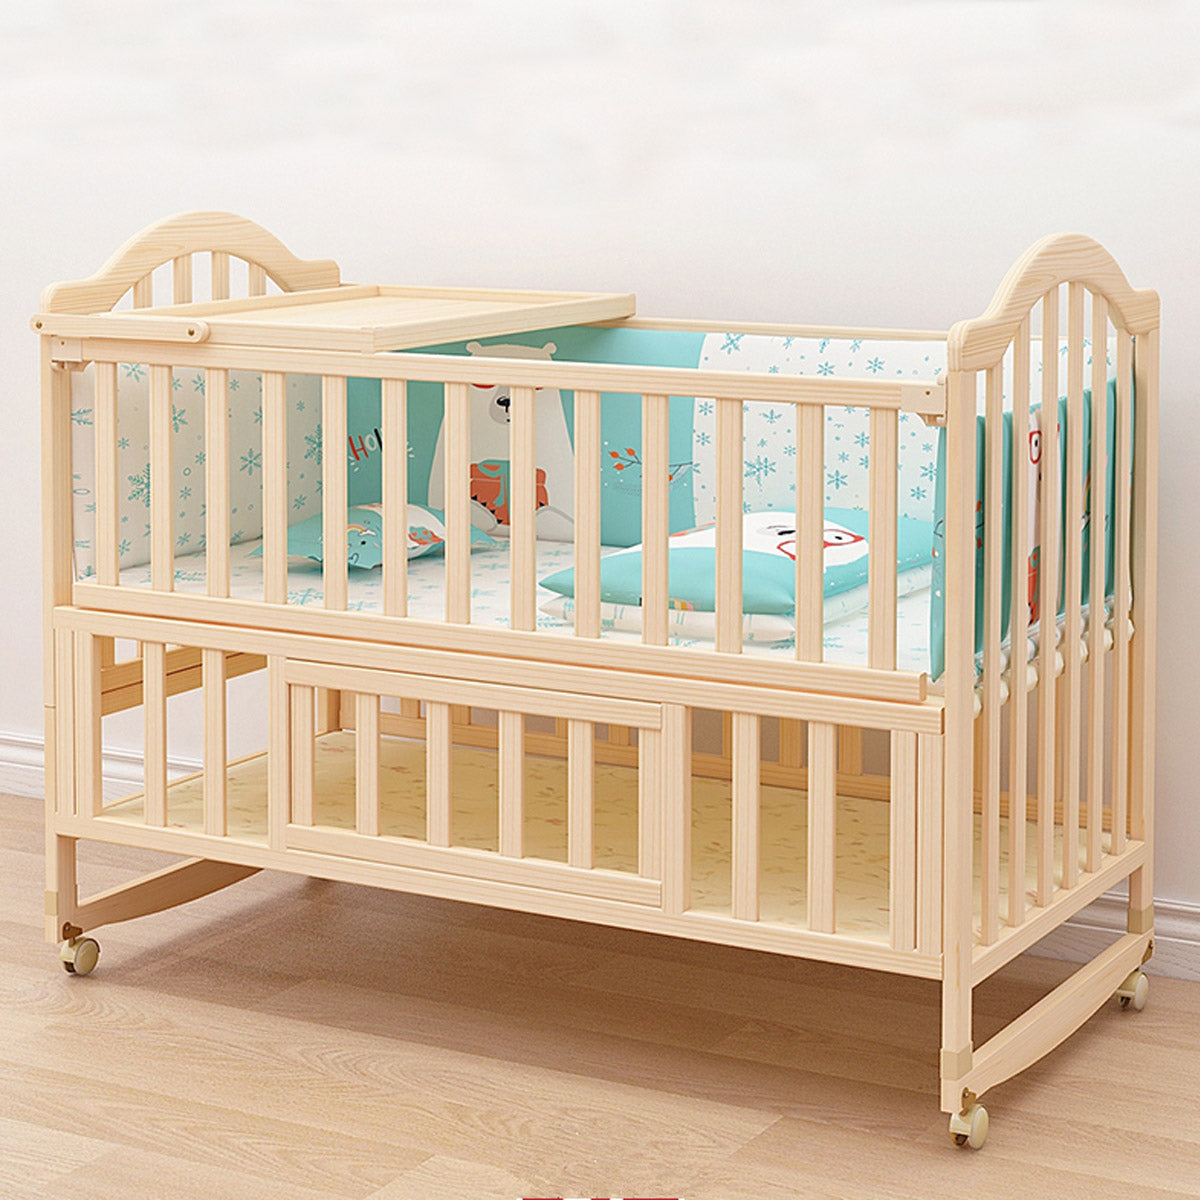 POLKA TOTS Elegant Wooden Rocking Cradle Baby Crib Cot / Kids Toddler Multifunctional Adjustable Bedding set with Mosquito net, Bumper Set, Pillow & Mat (Dino Bedding Set)